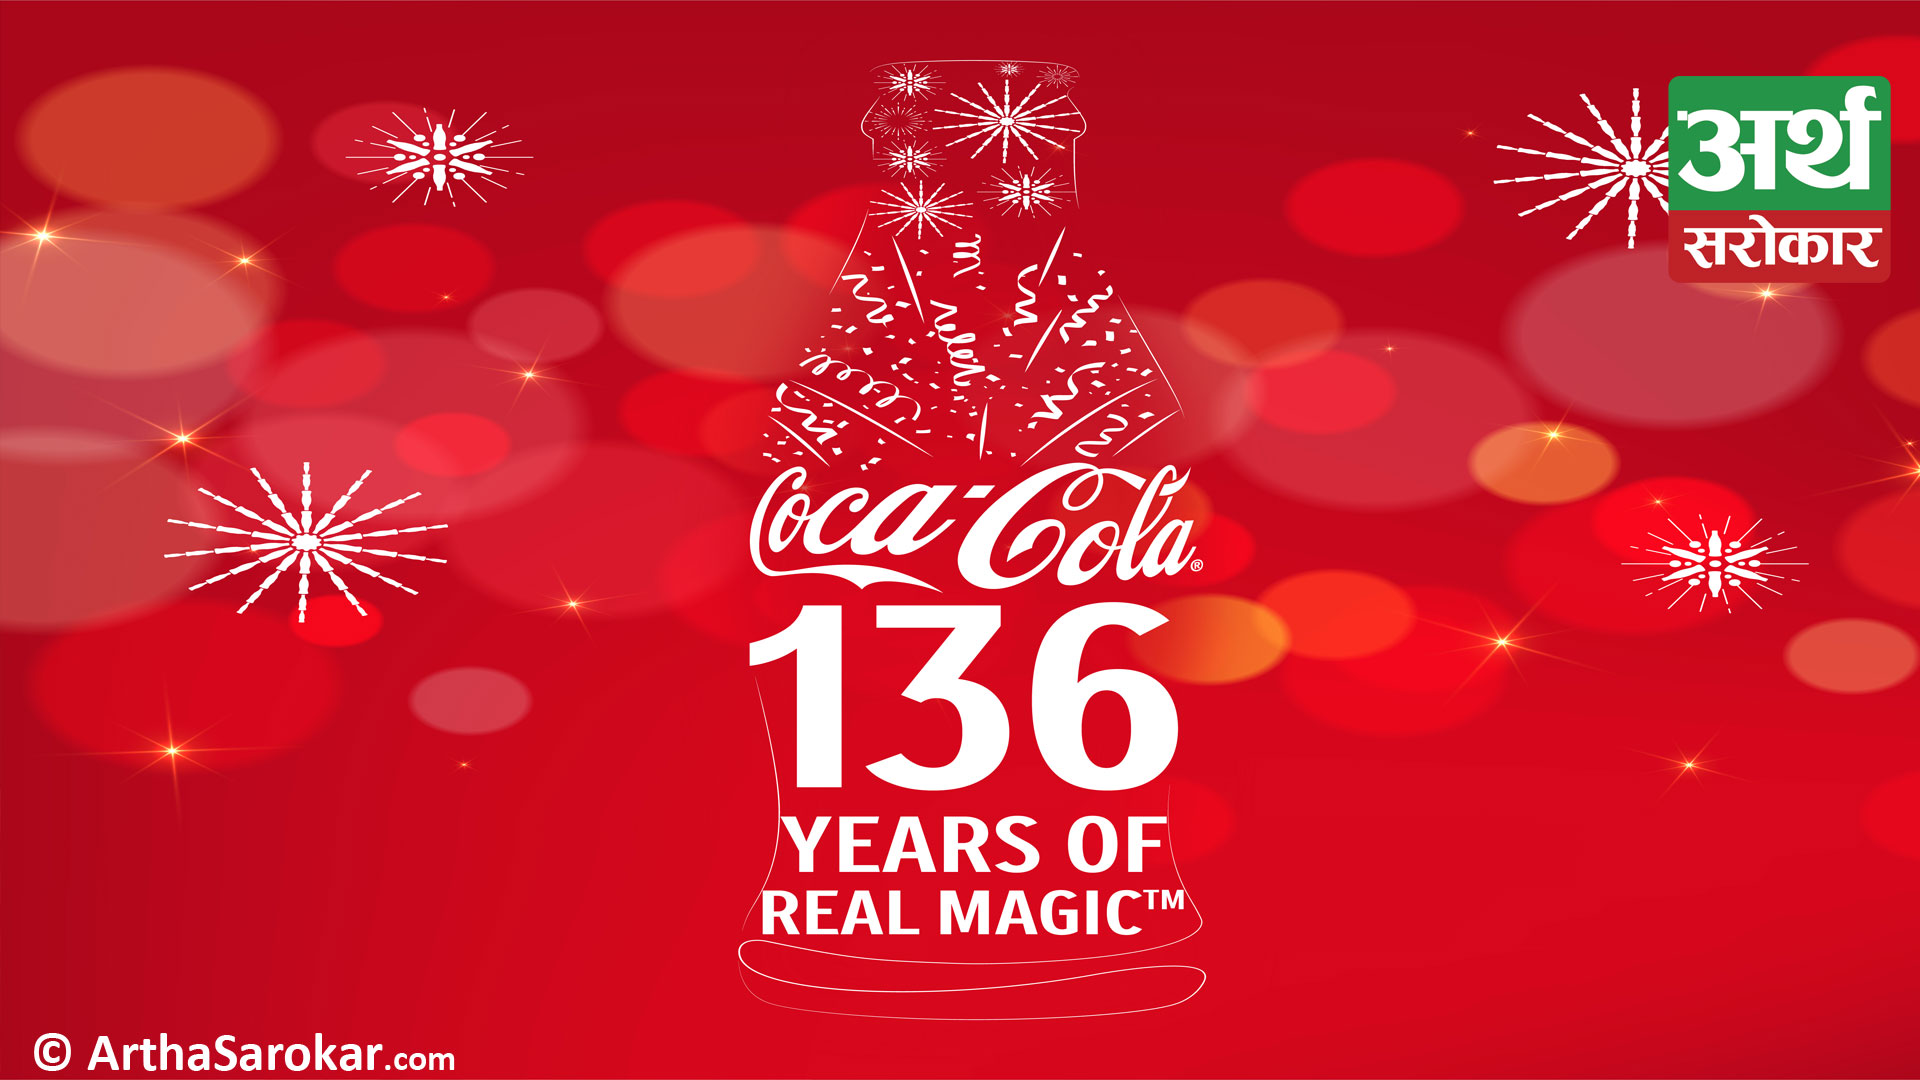 Coca-Cola celebrates 136 years of Real Magic